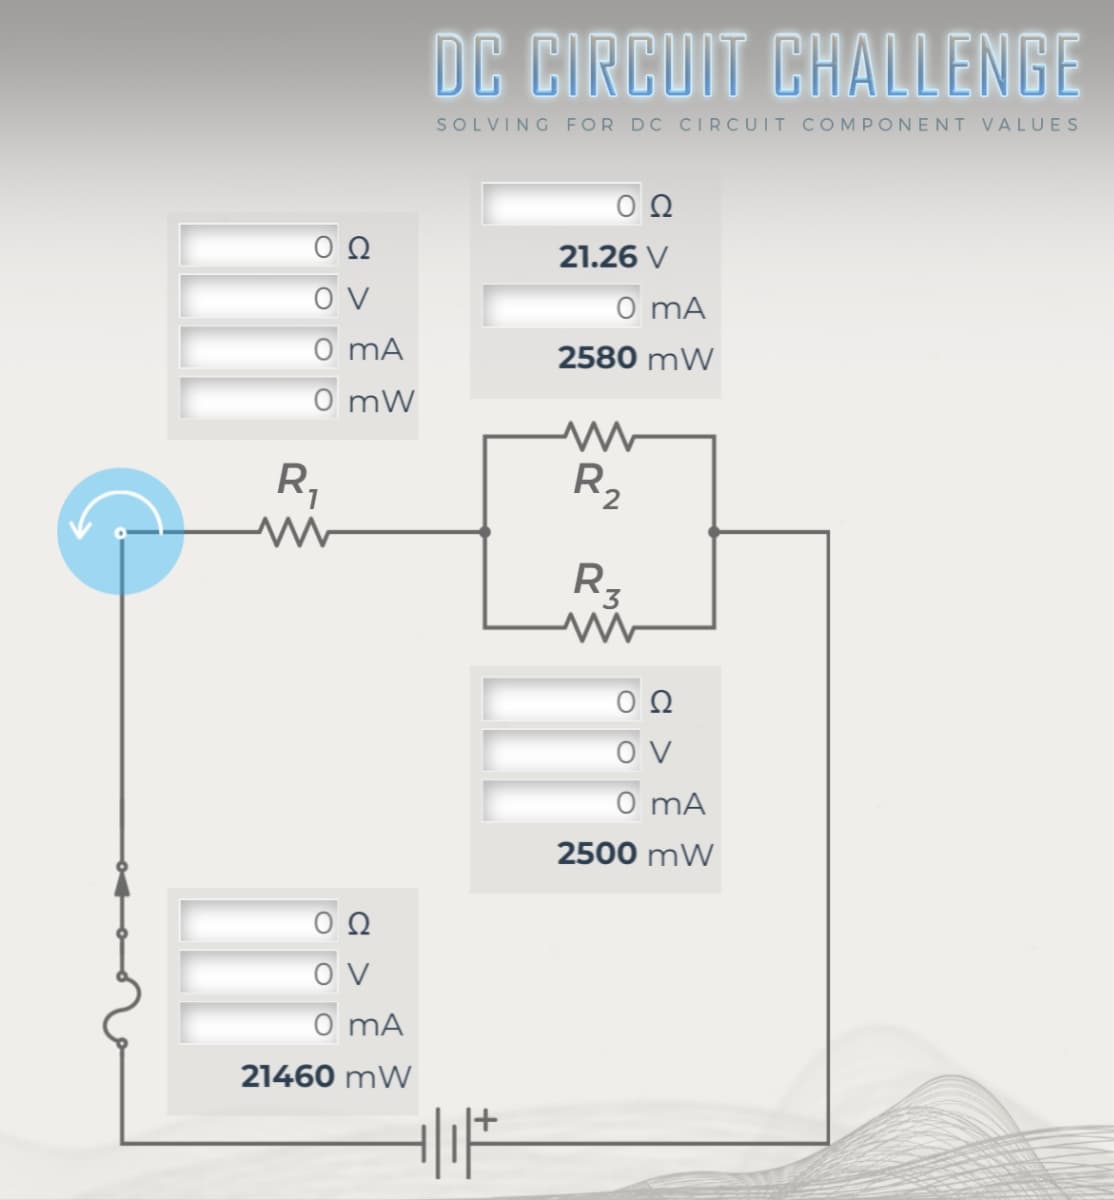 DC CIRCUIT CHALLENGE
SOLVING FOR DC CIRCUIT COMPONENT VALUES
Ο Ω
21.26 V
V
0 mA
0 mA
2580 mW
0mW
ww
R₁₁
R₂
www
R3
www
V
0 mA
21460 mW
|
00
OV
0 mA
2500 mW